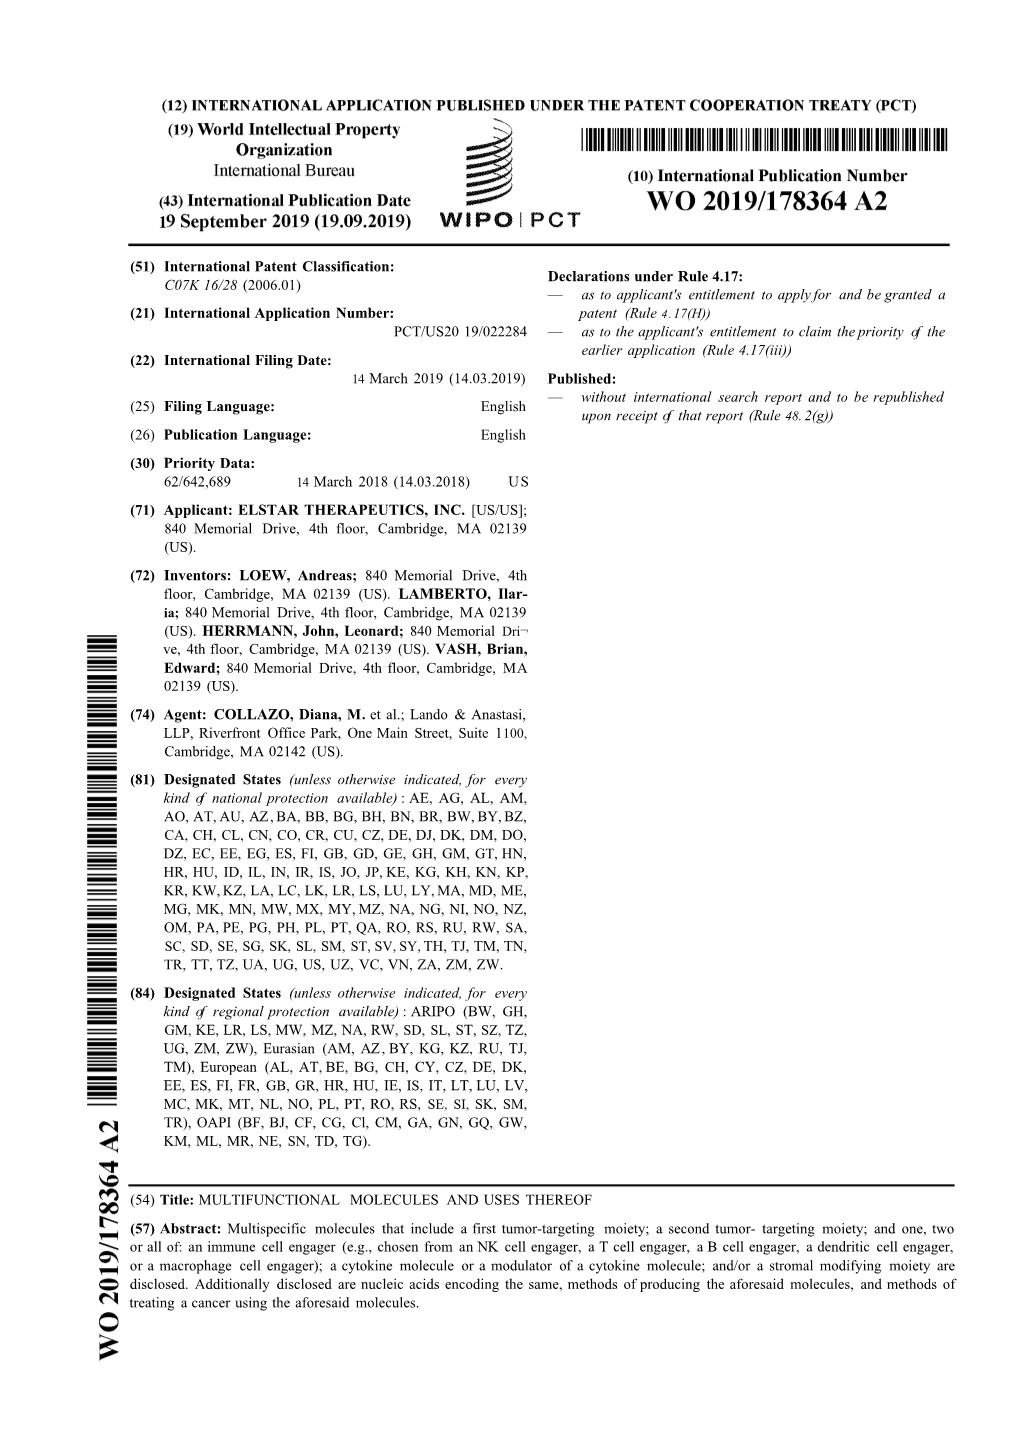 (51) International Patent Classification: C07K 16/28 (2006.01